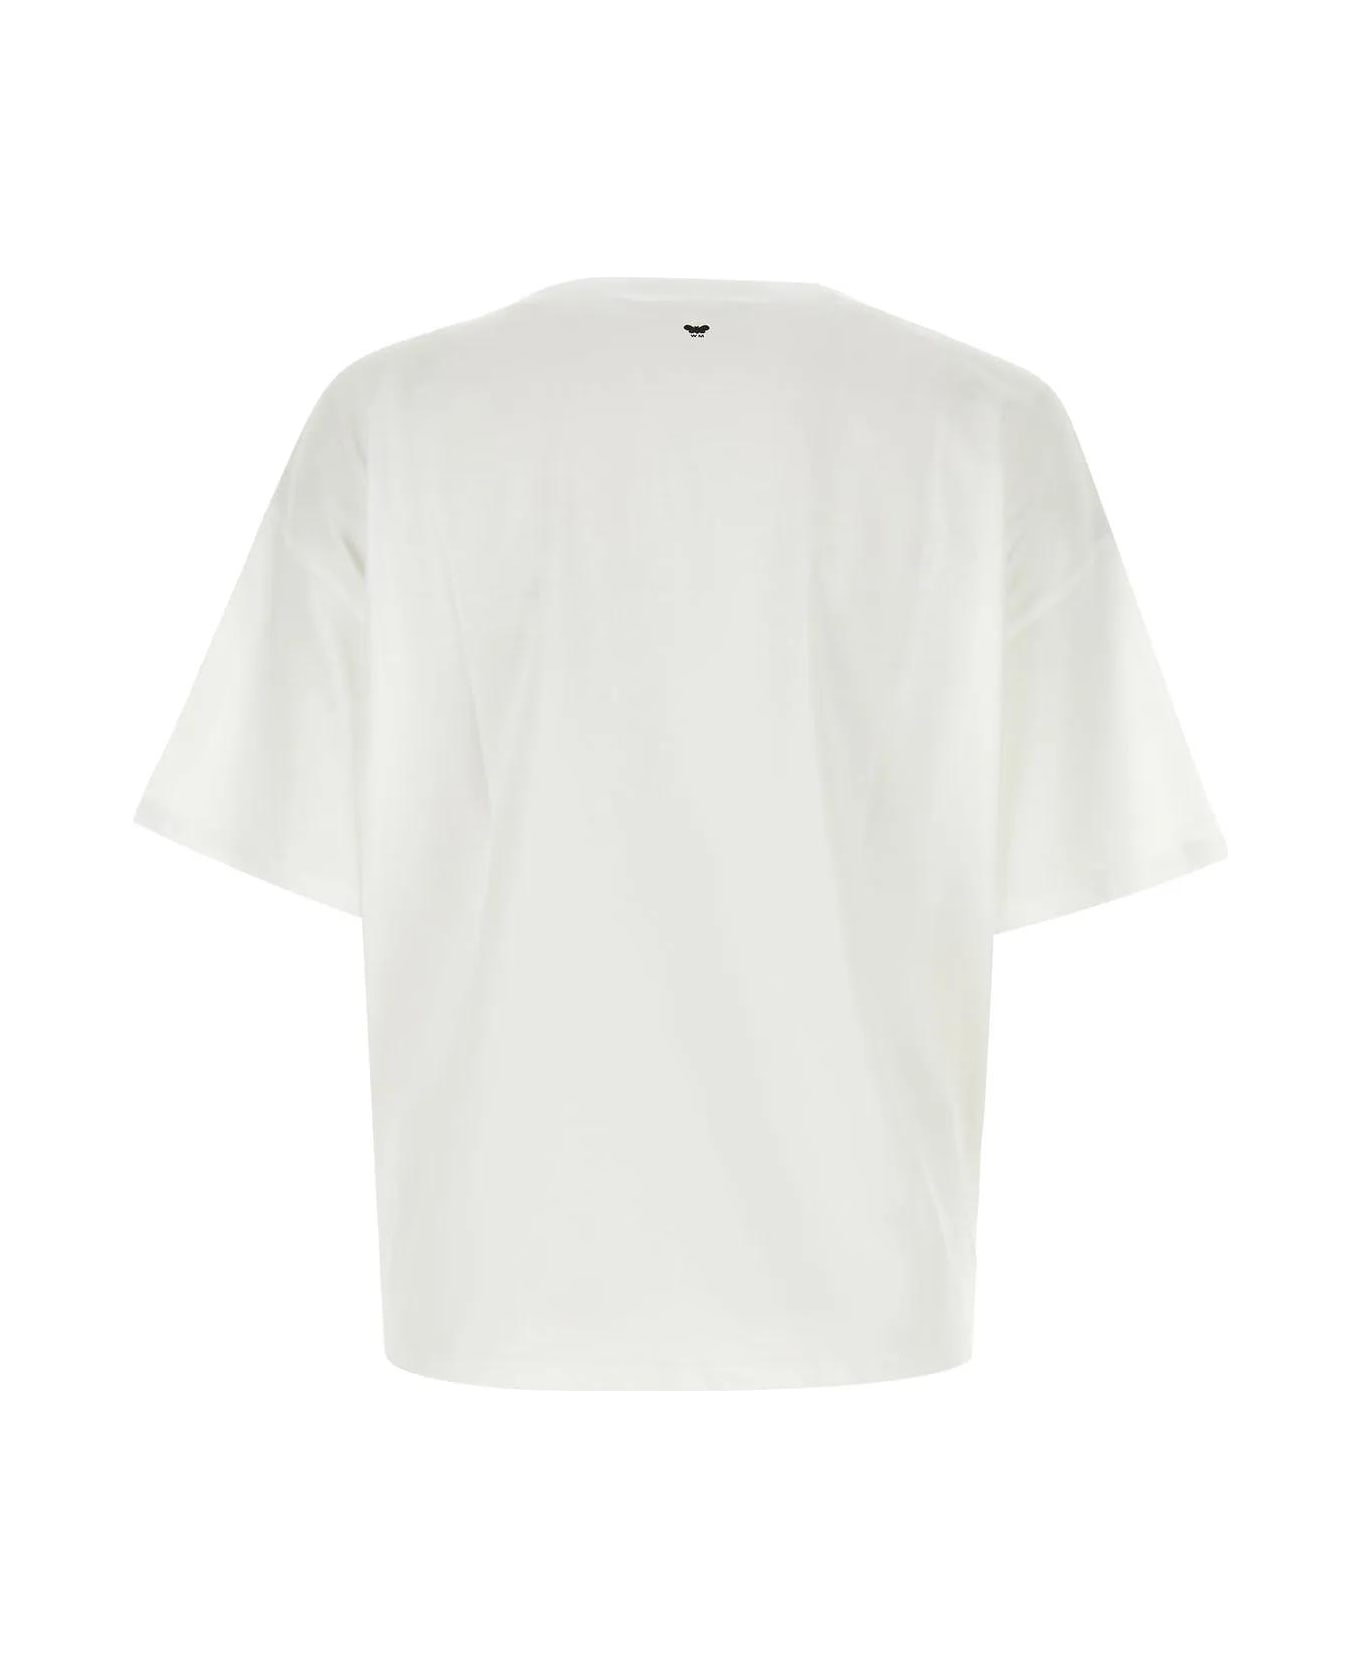 Weekend Max Mara Printed Cotton And Silk Malaga Oversize T-shirt - Bianco Bluette